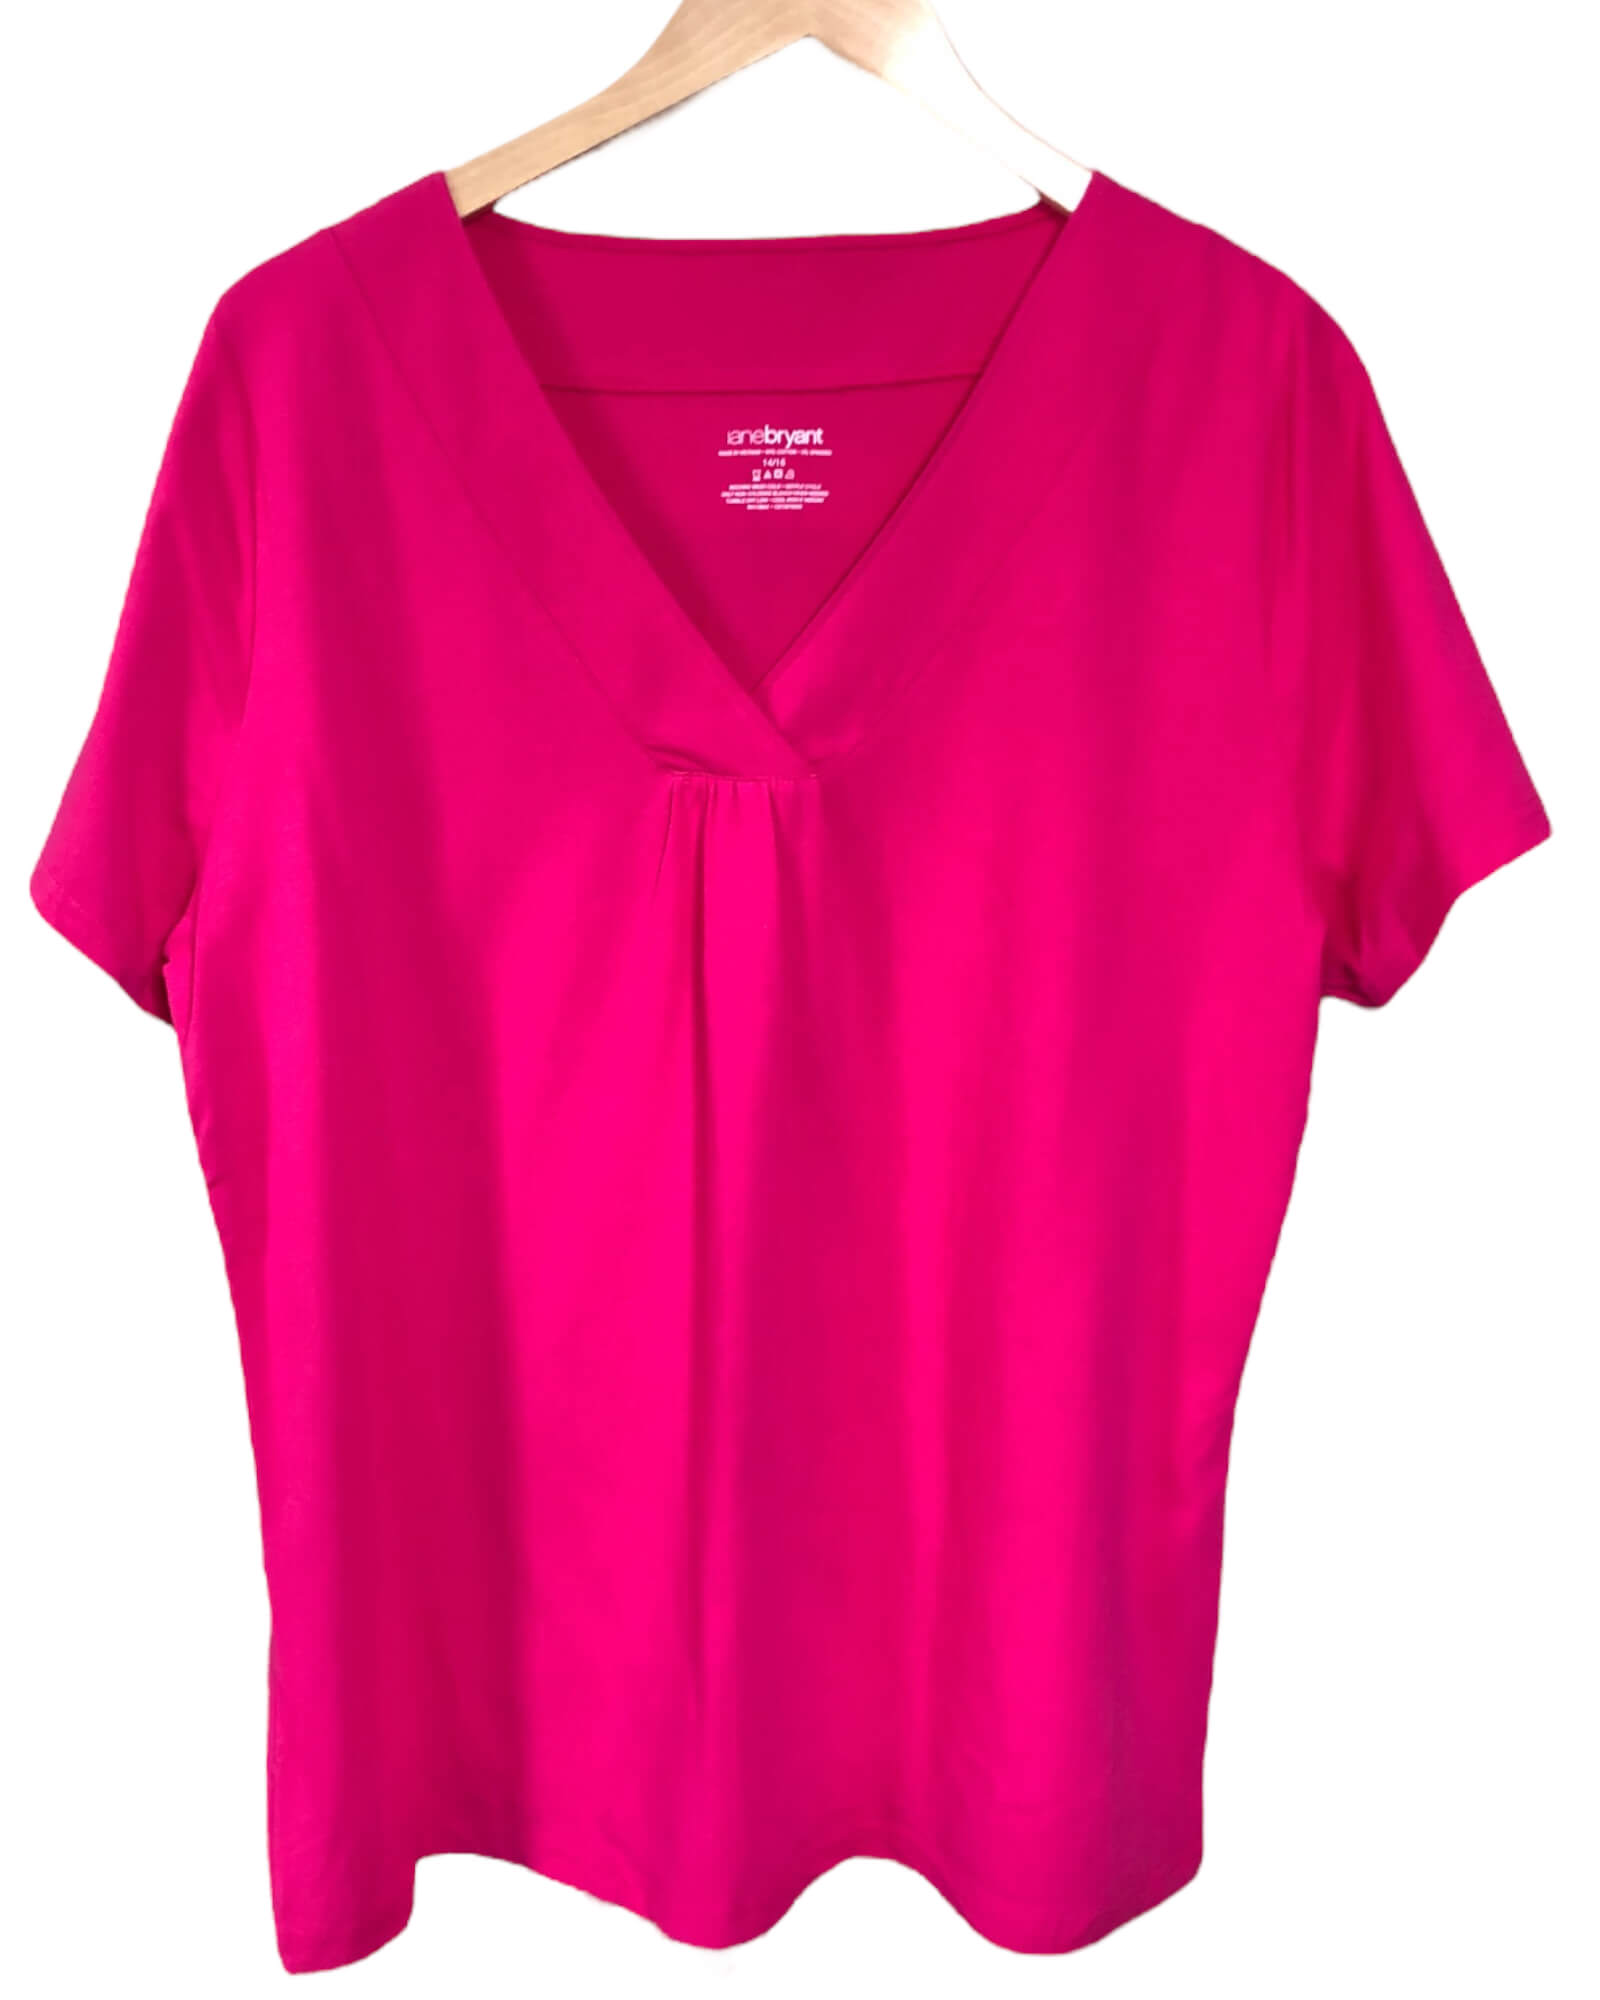 Bright Spring LANE BRYANT pink v-neck tee t-shirt